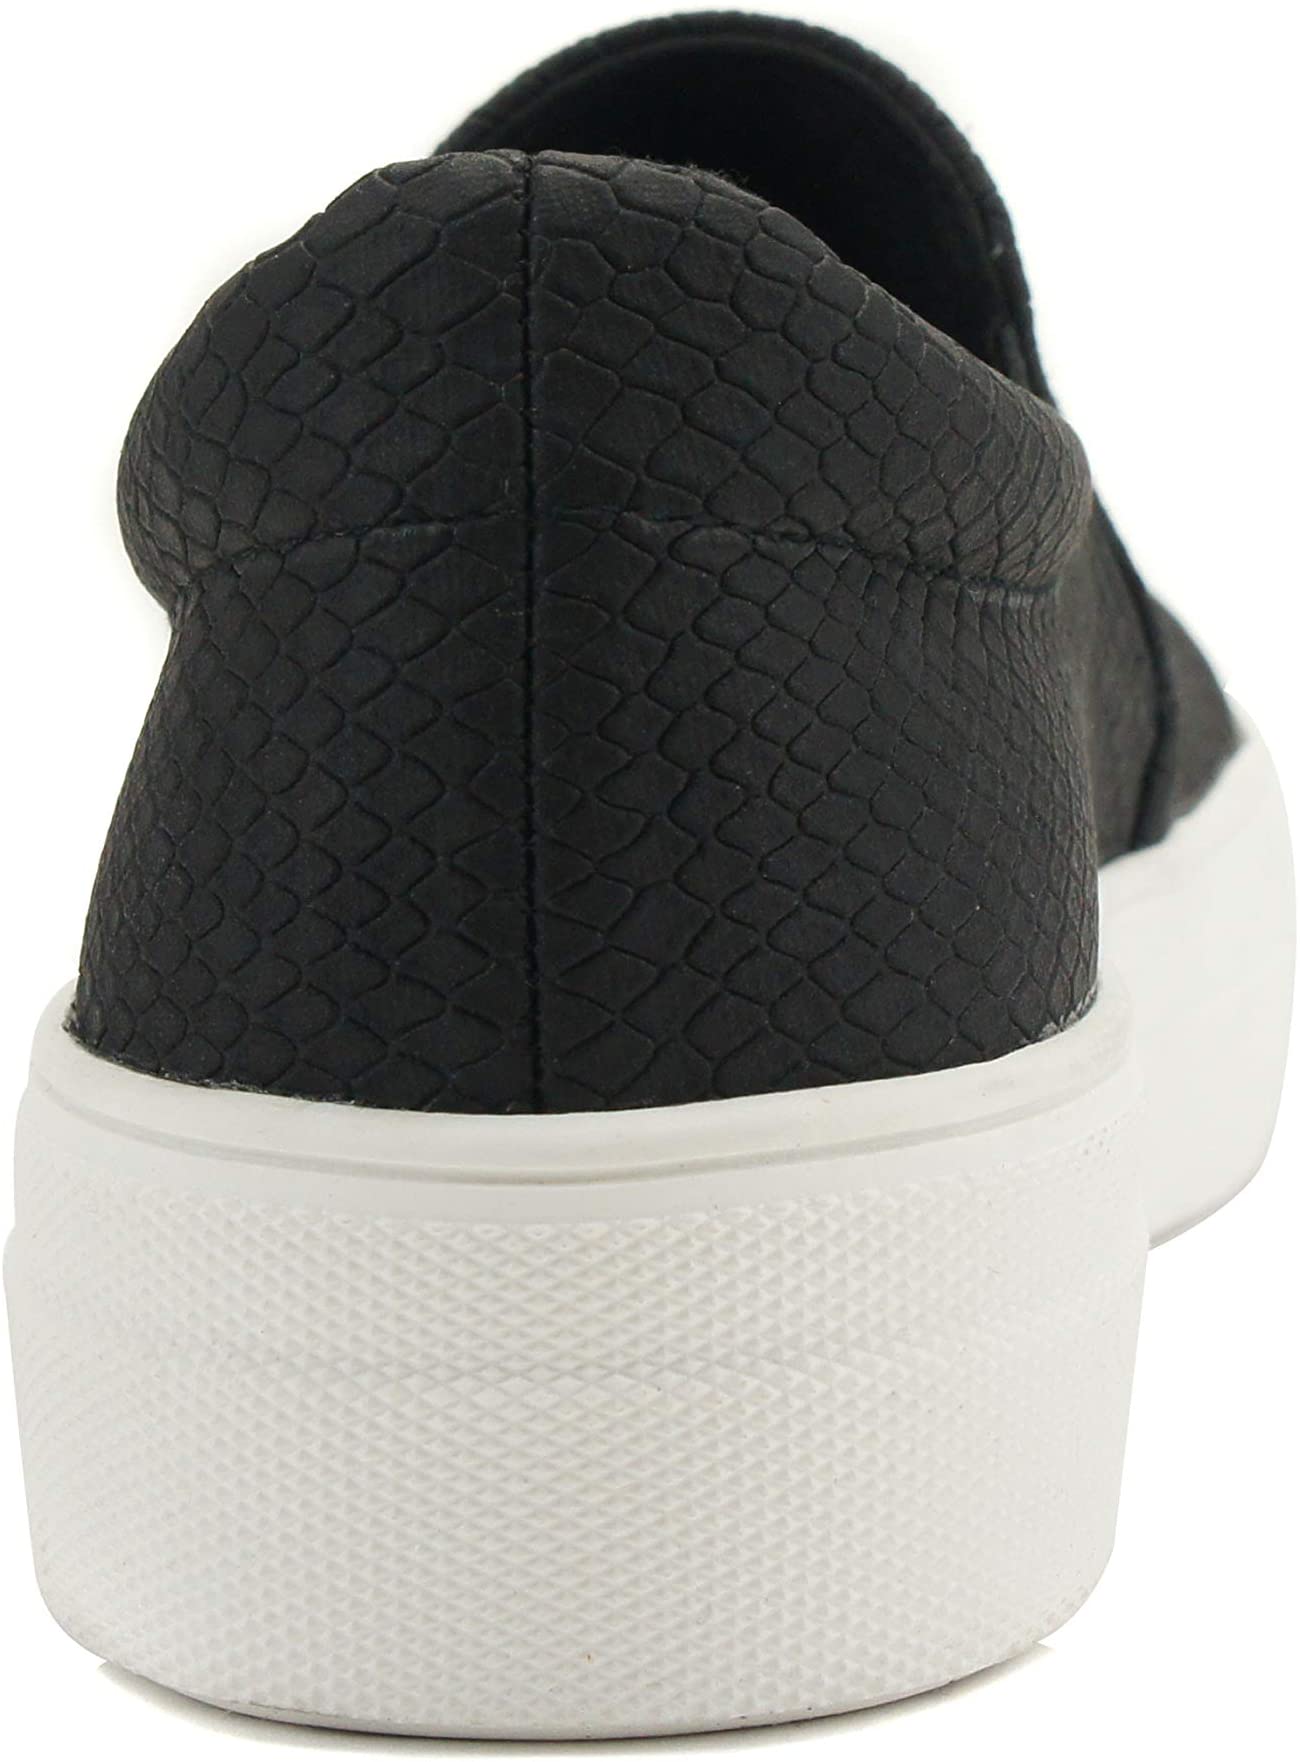 Soda Flat Women Shoes Slip On Loafers Casual Sneakers Memory Foam Insoles Hidden Platform / Flatform Round Toe HIKE-G PU Black Cobra Snake 6.5 - image 5 of 5